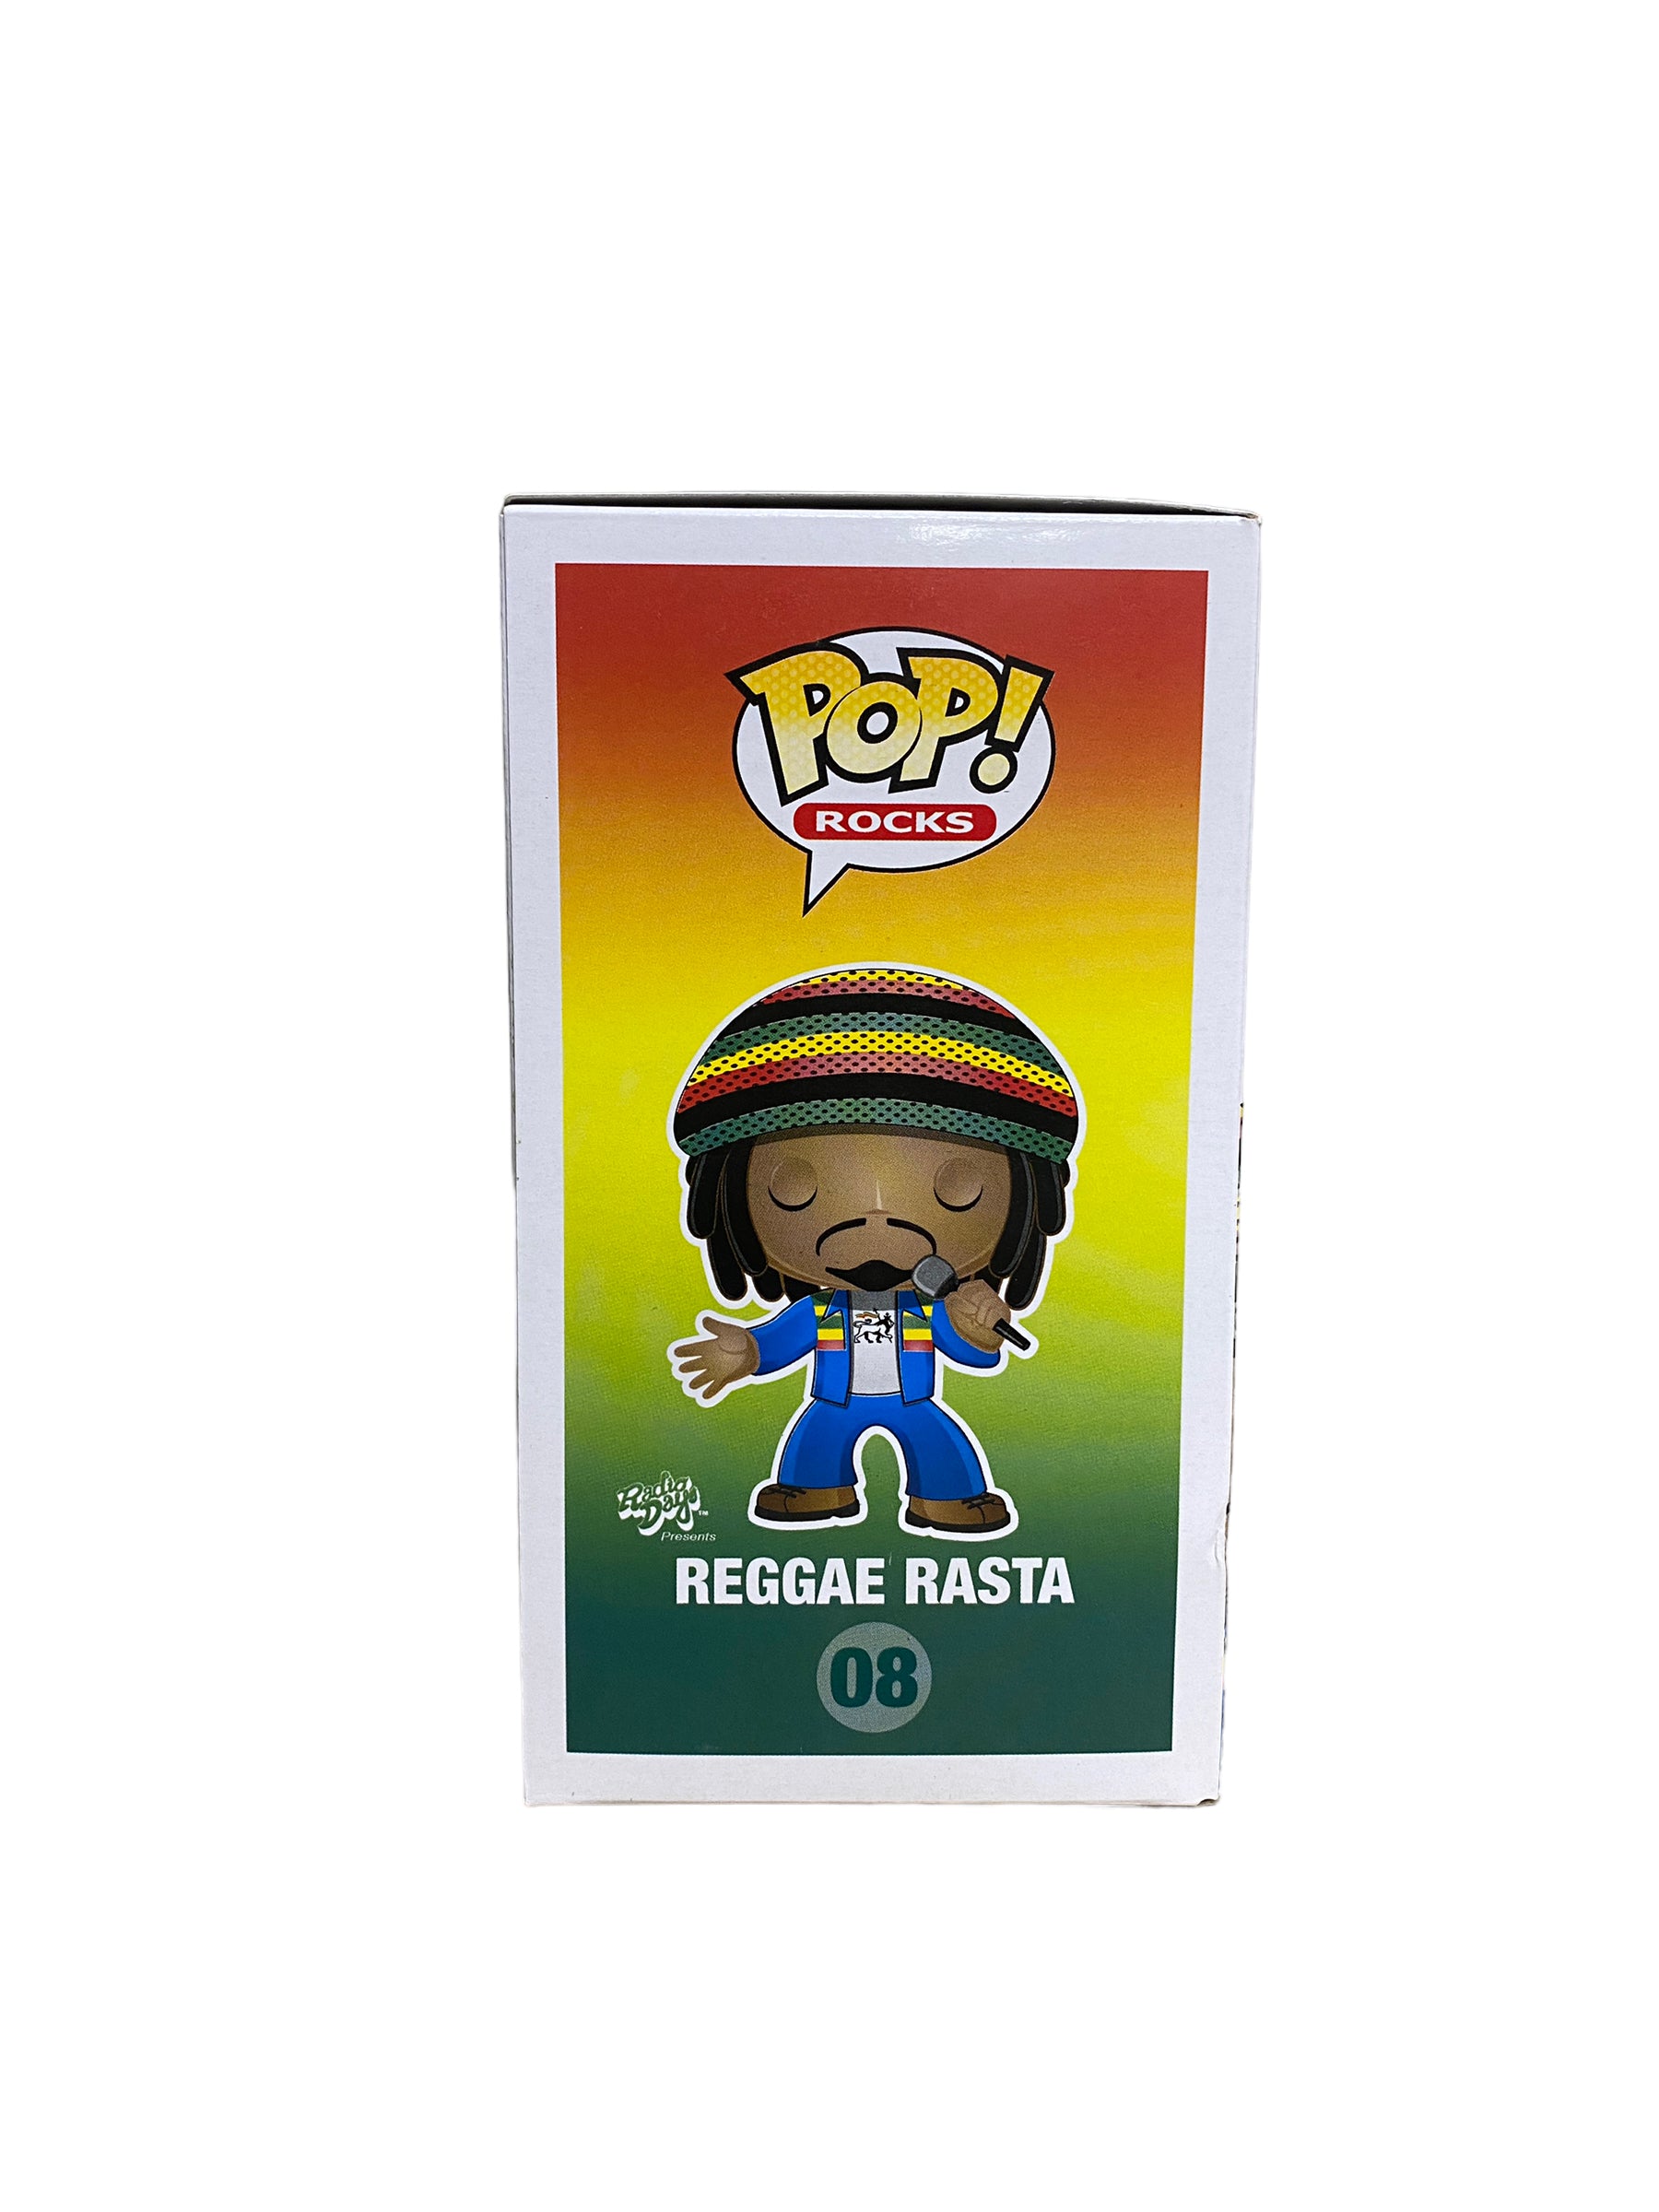 Reggae Rasta #08 (Chase) Funko Pop! - Rocks! - 2010 Pop! - Condition 8/10